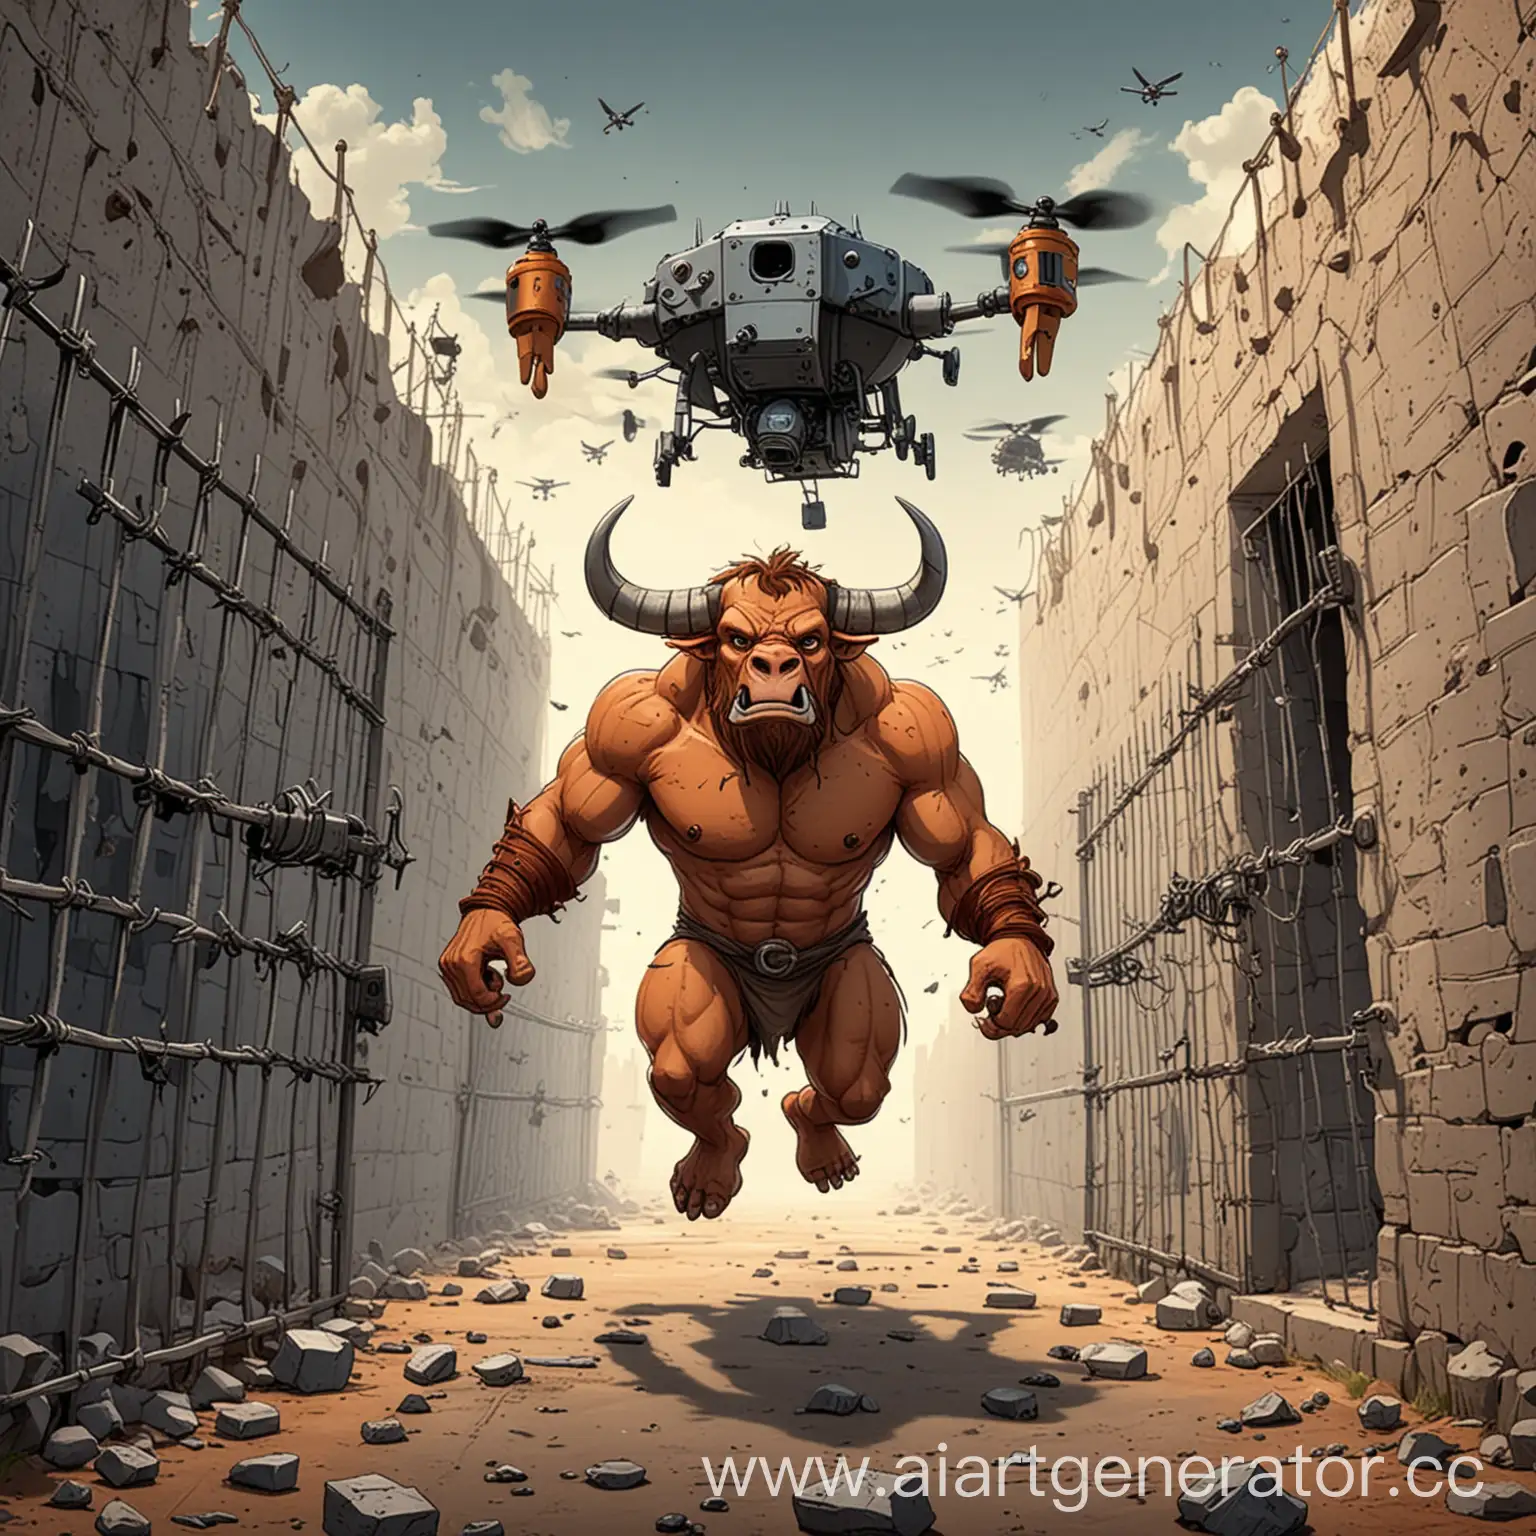 Cartoon-Minotaur-Escaping-Prison-from-Drones